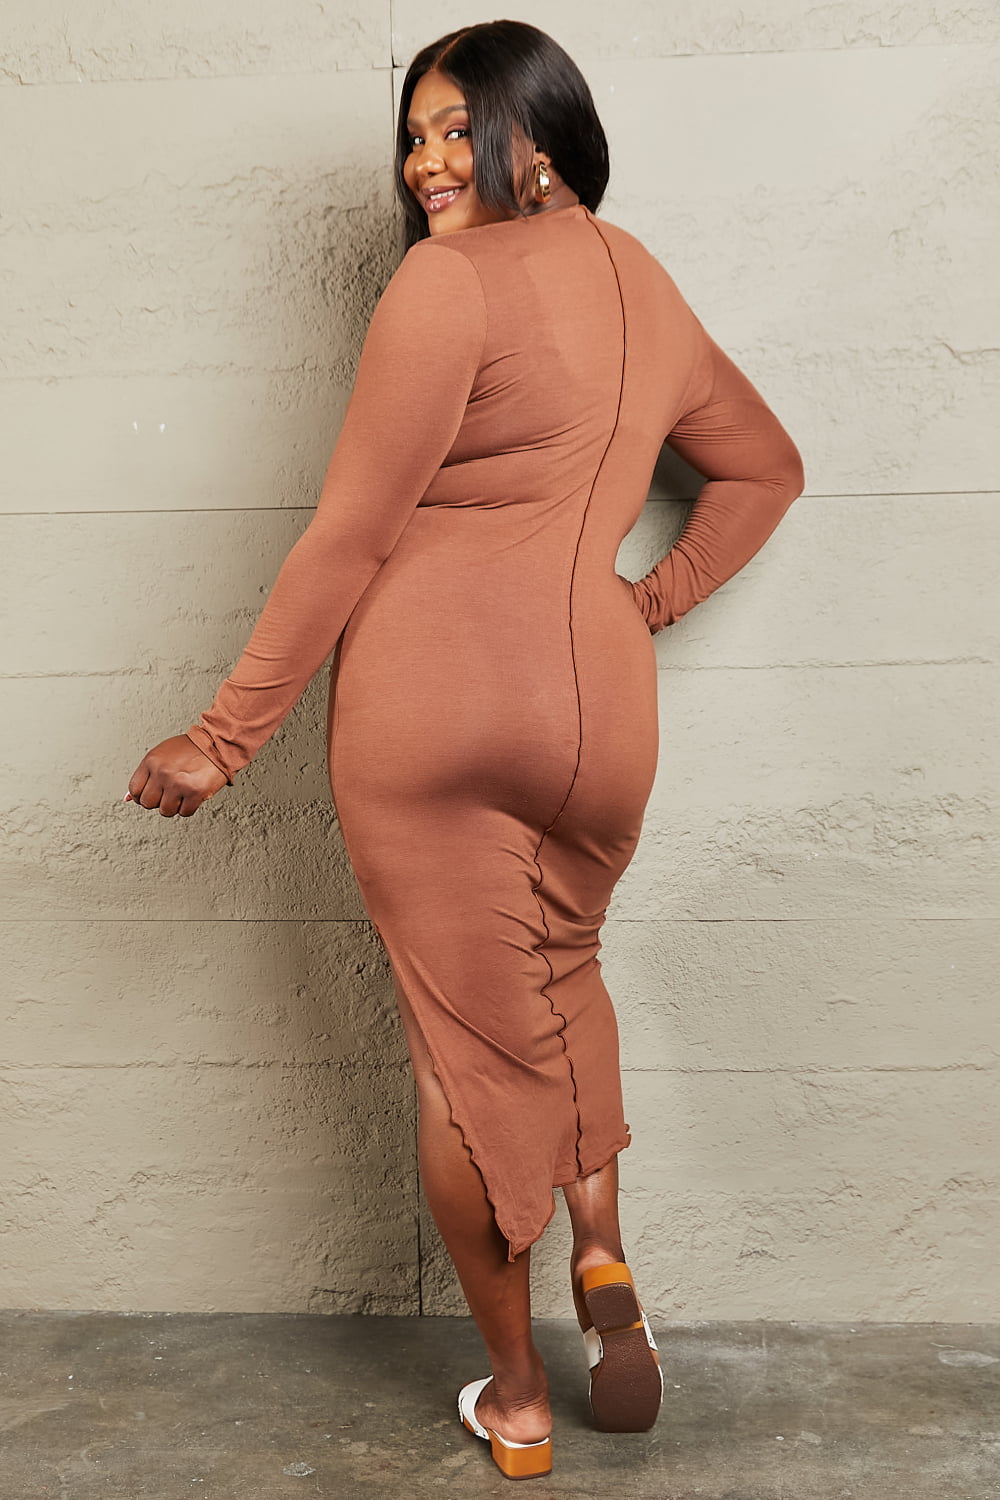 Give MeThe Night Bodycon Dress Caramel Midi Dress by Vim&Vigor | Vim&Vigor Boutique